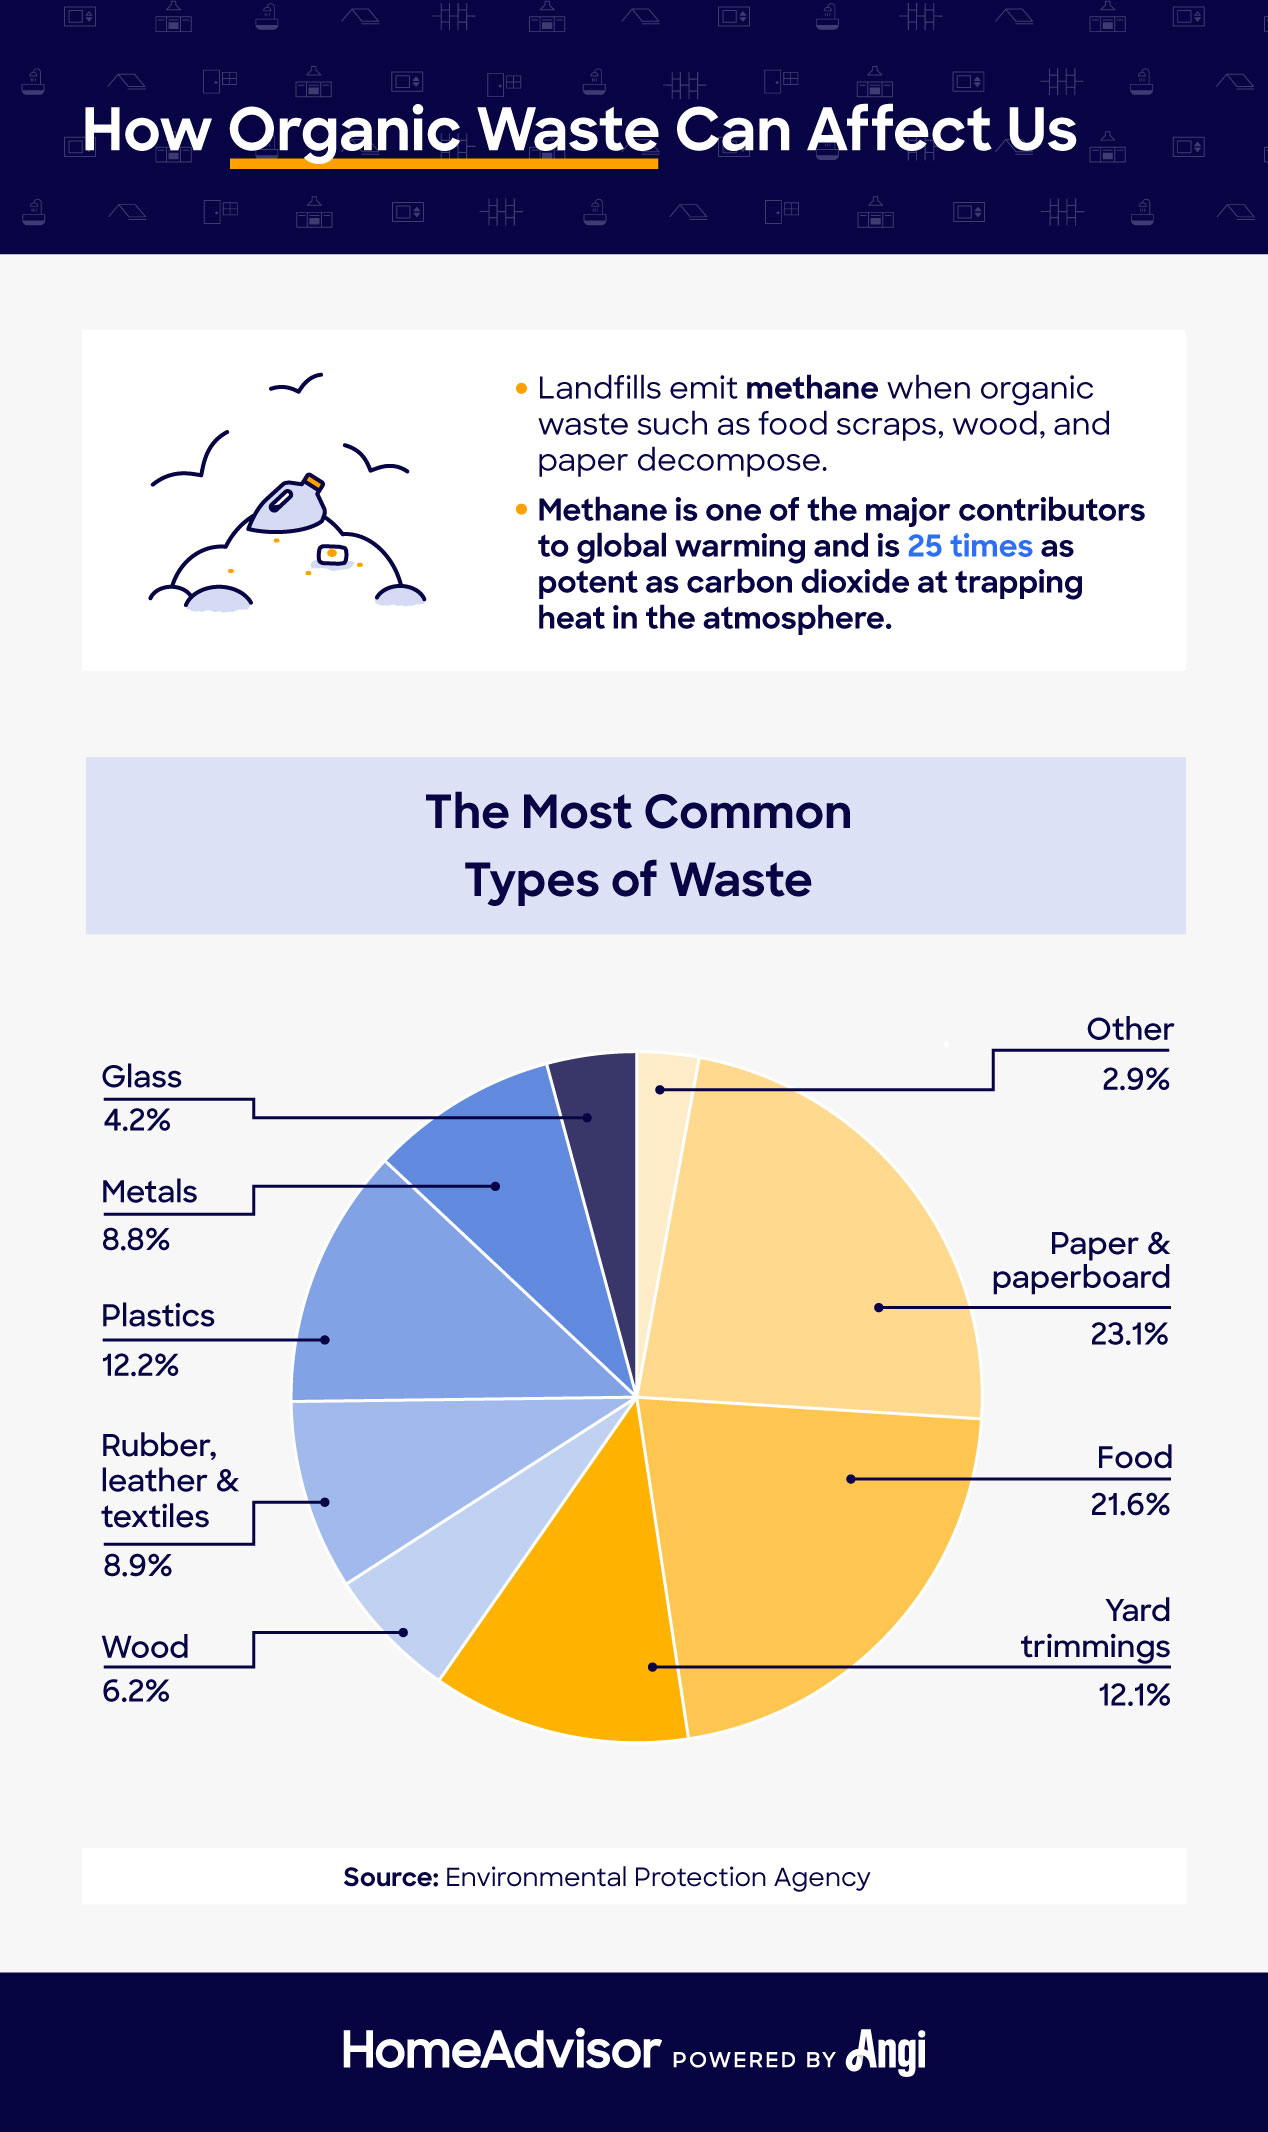 https://www.homeadvisor.com/r/wp-content/uploads/2022/09/how-organic-waste-can-affect-us.jpg